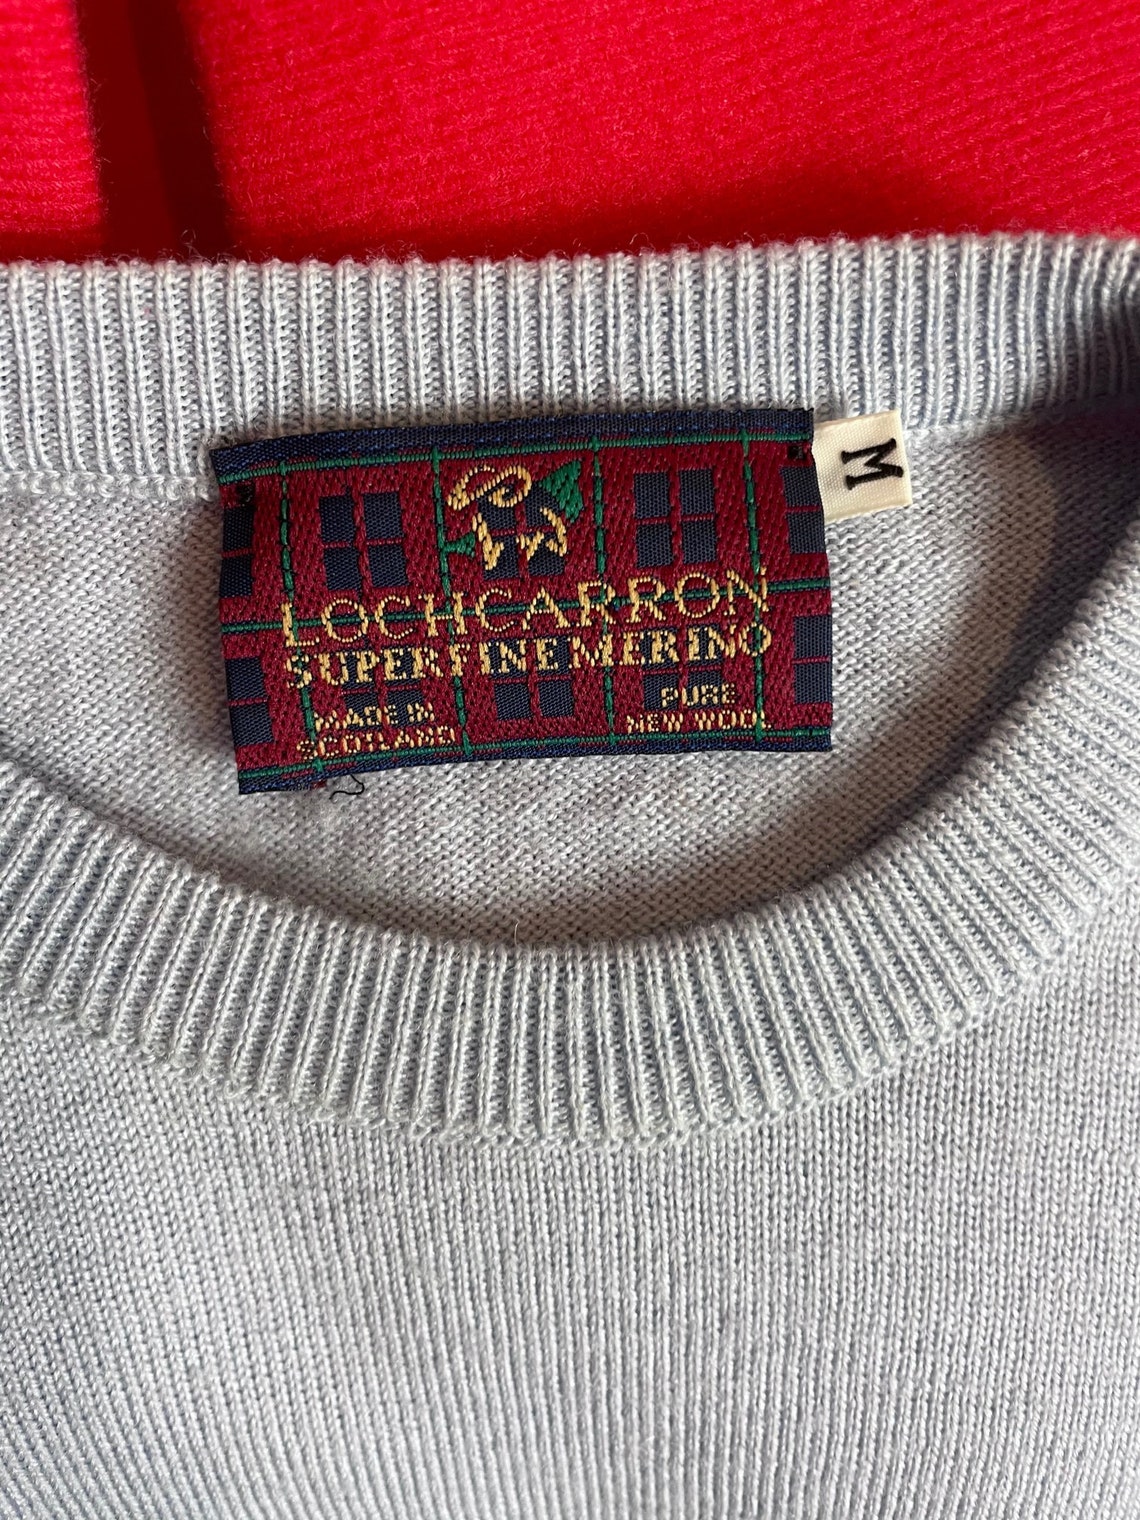 Lochcarron Baby Blue Superfine Merino Wool Scottish Sweater | Etsy